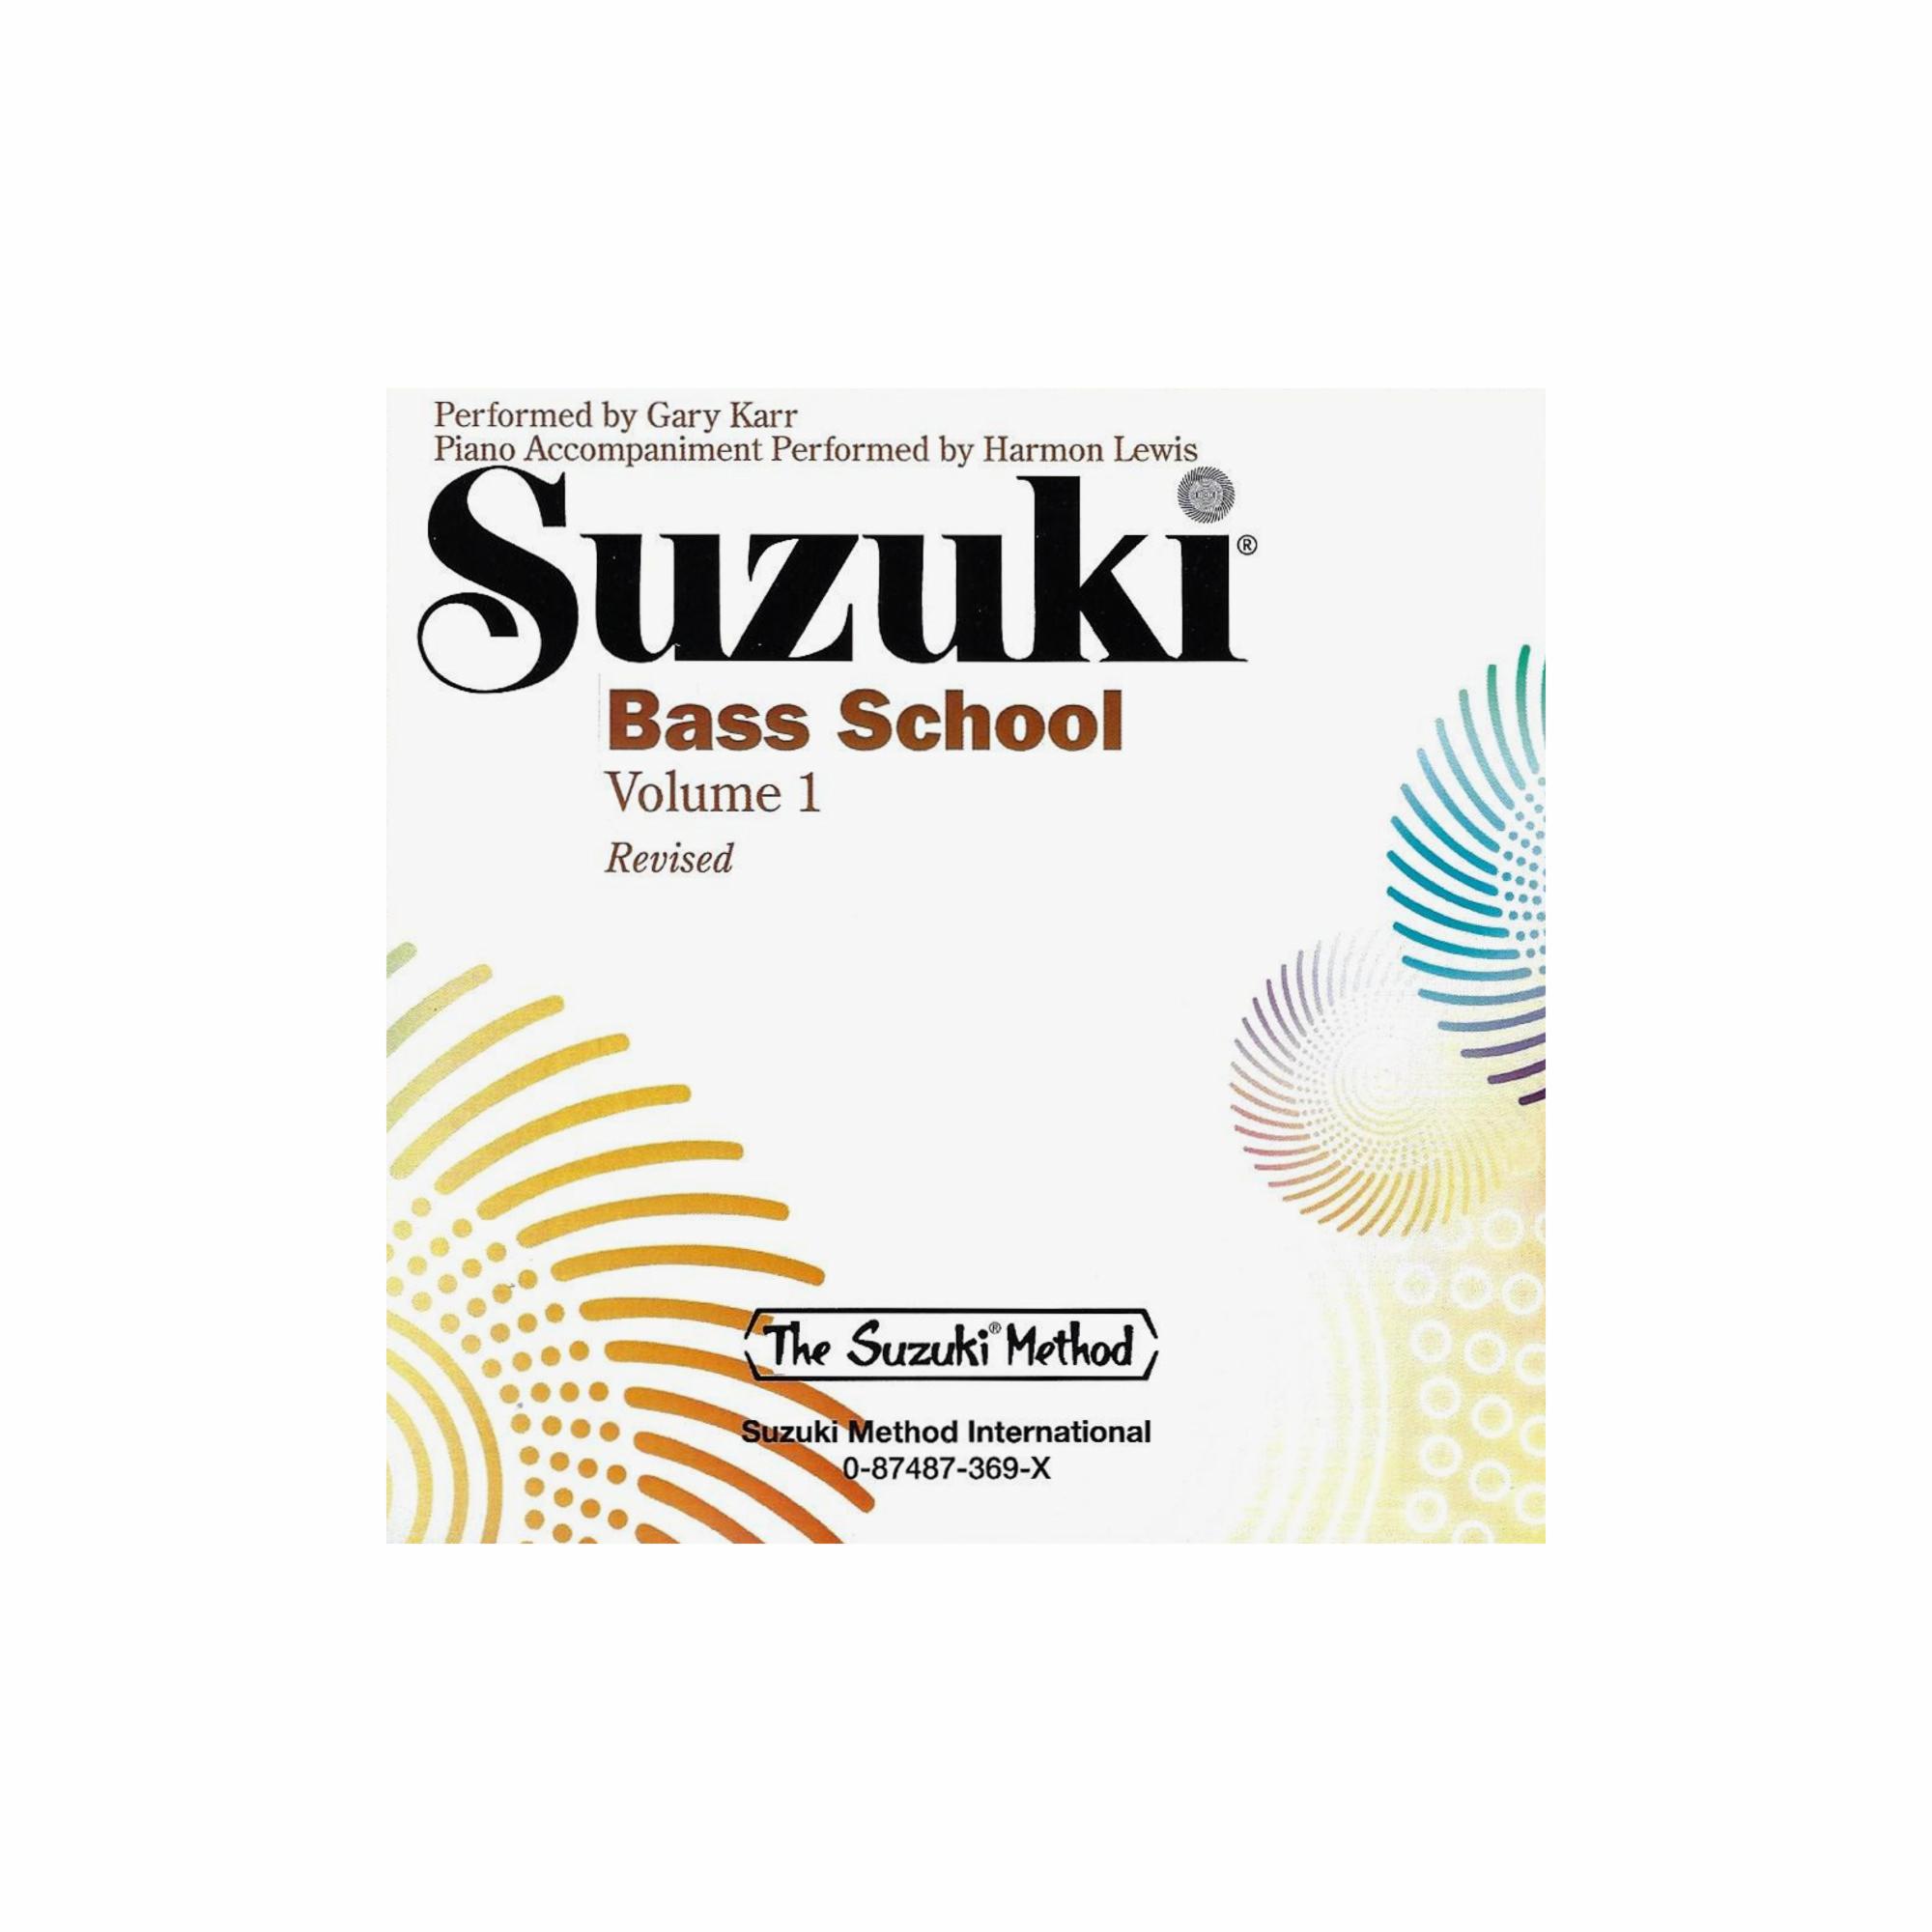 Suzuki Bass School: CD's